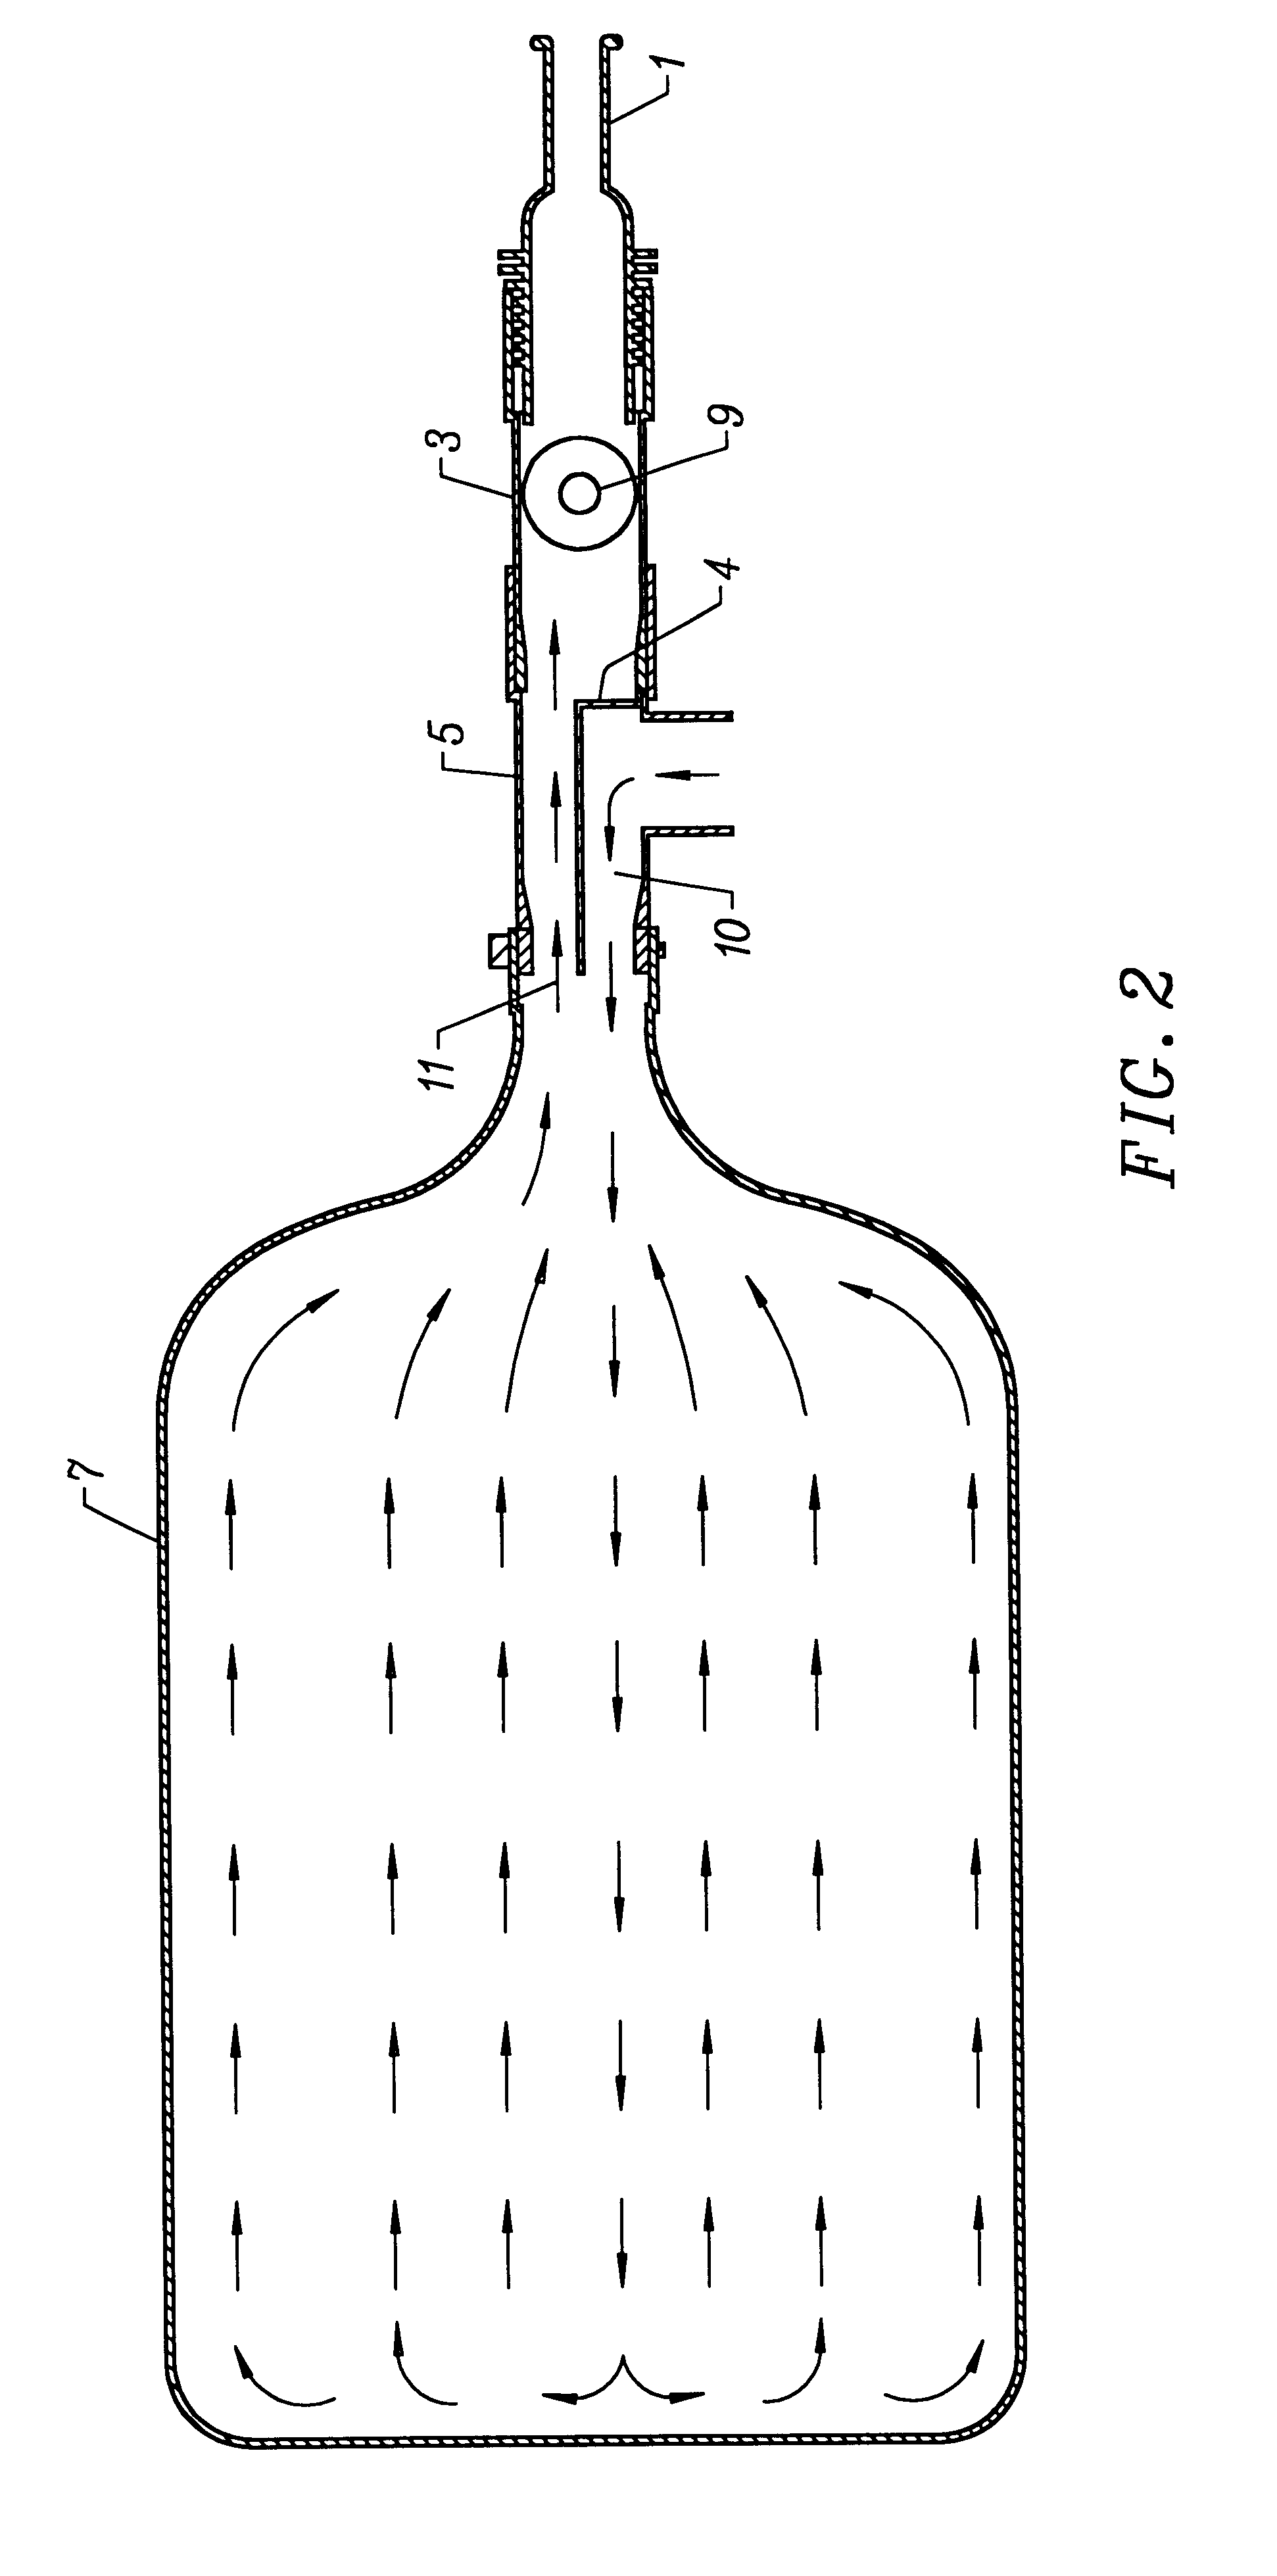 Inhalation therapy apparatus